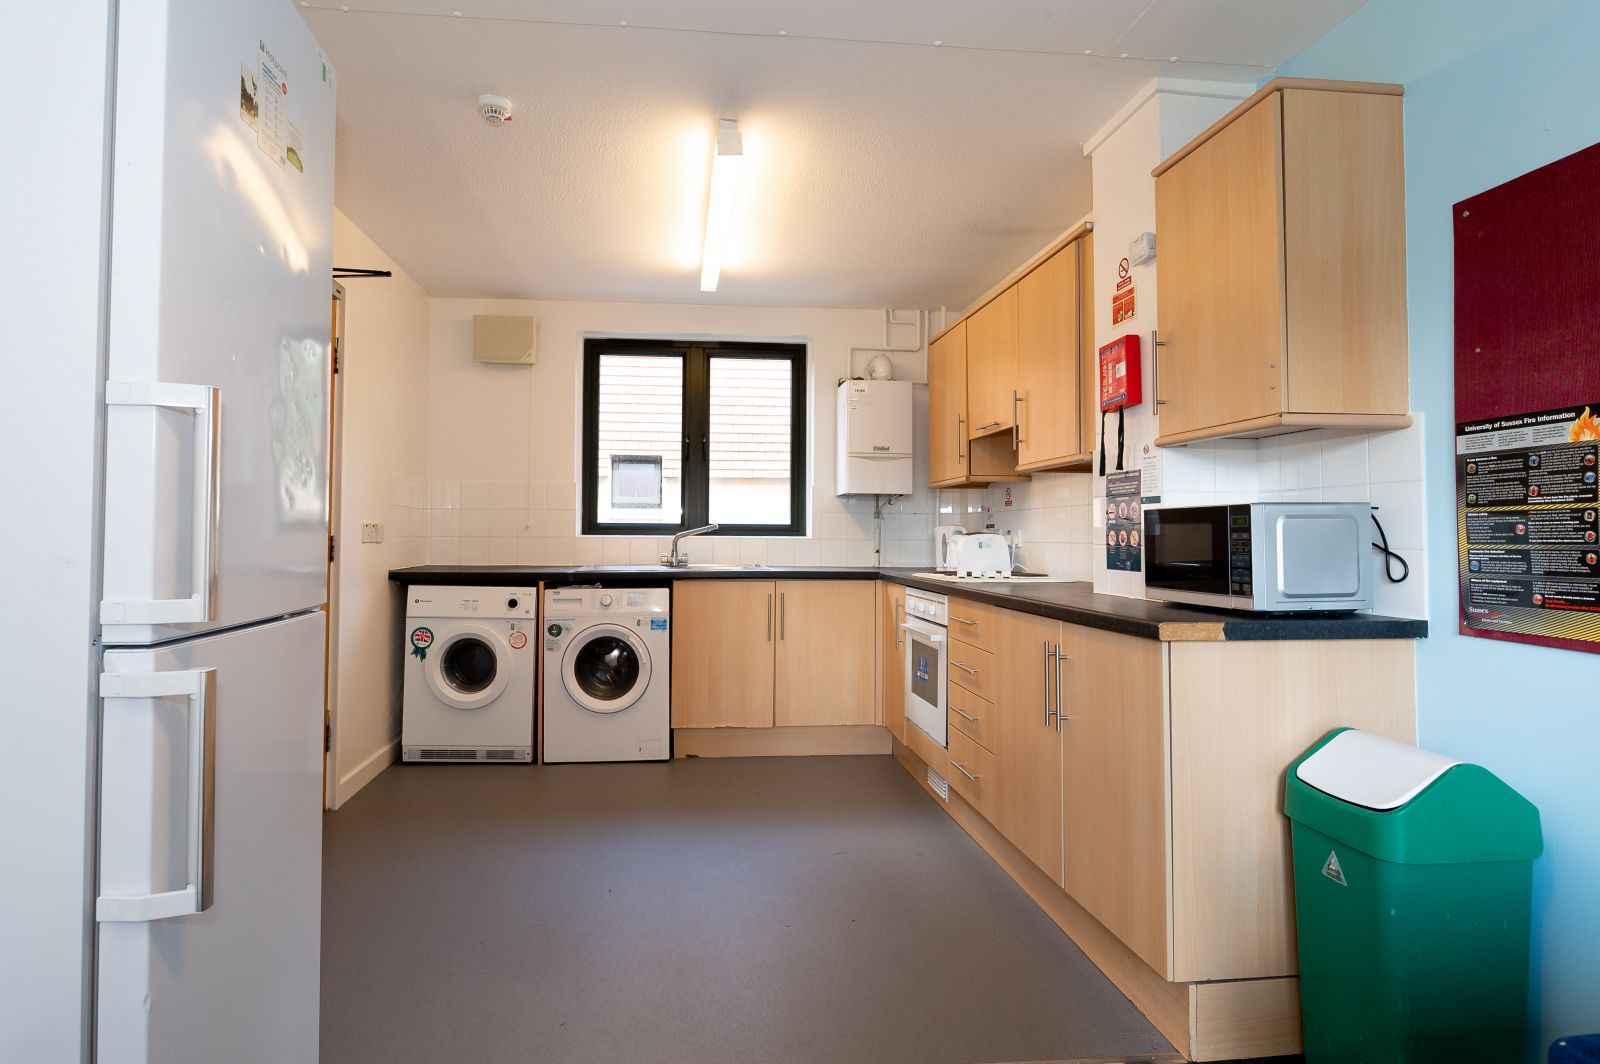 Brighthelm accommodation kitchen area